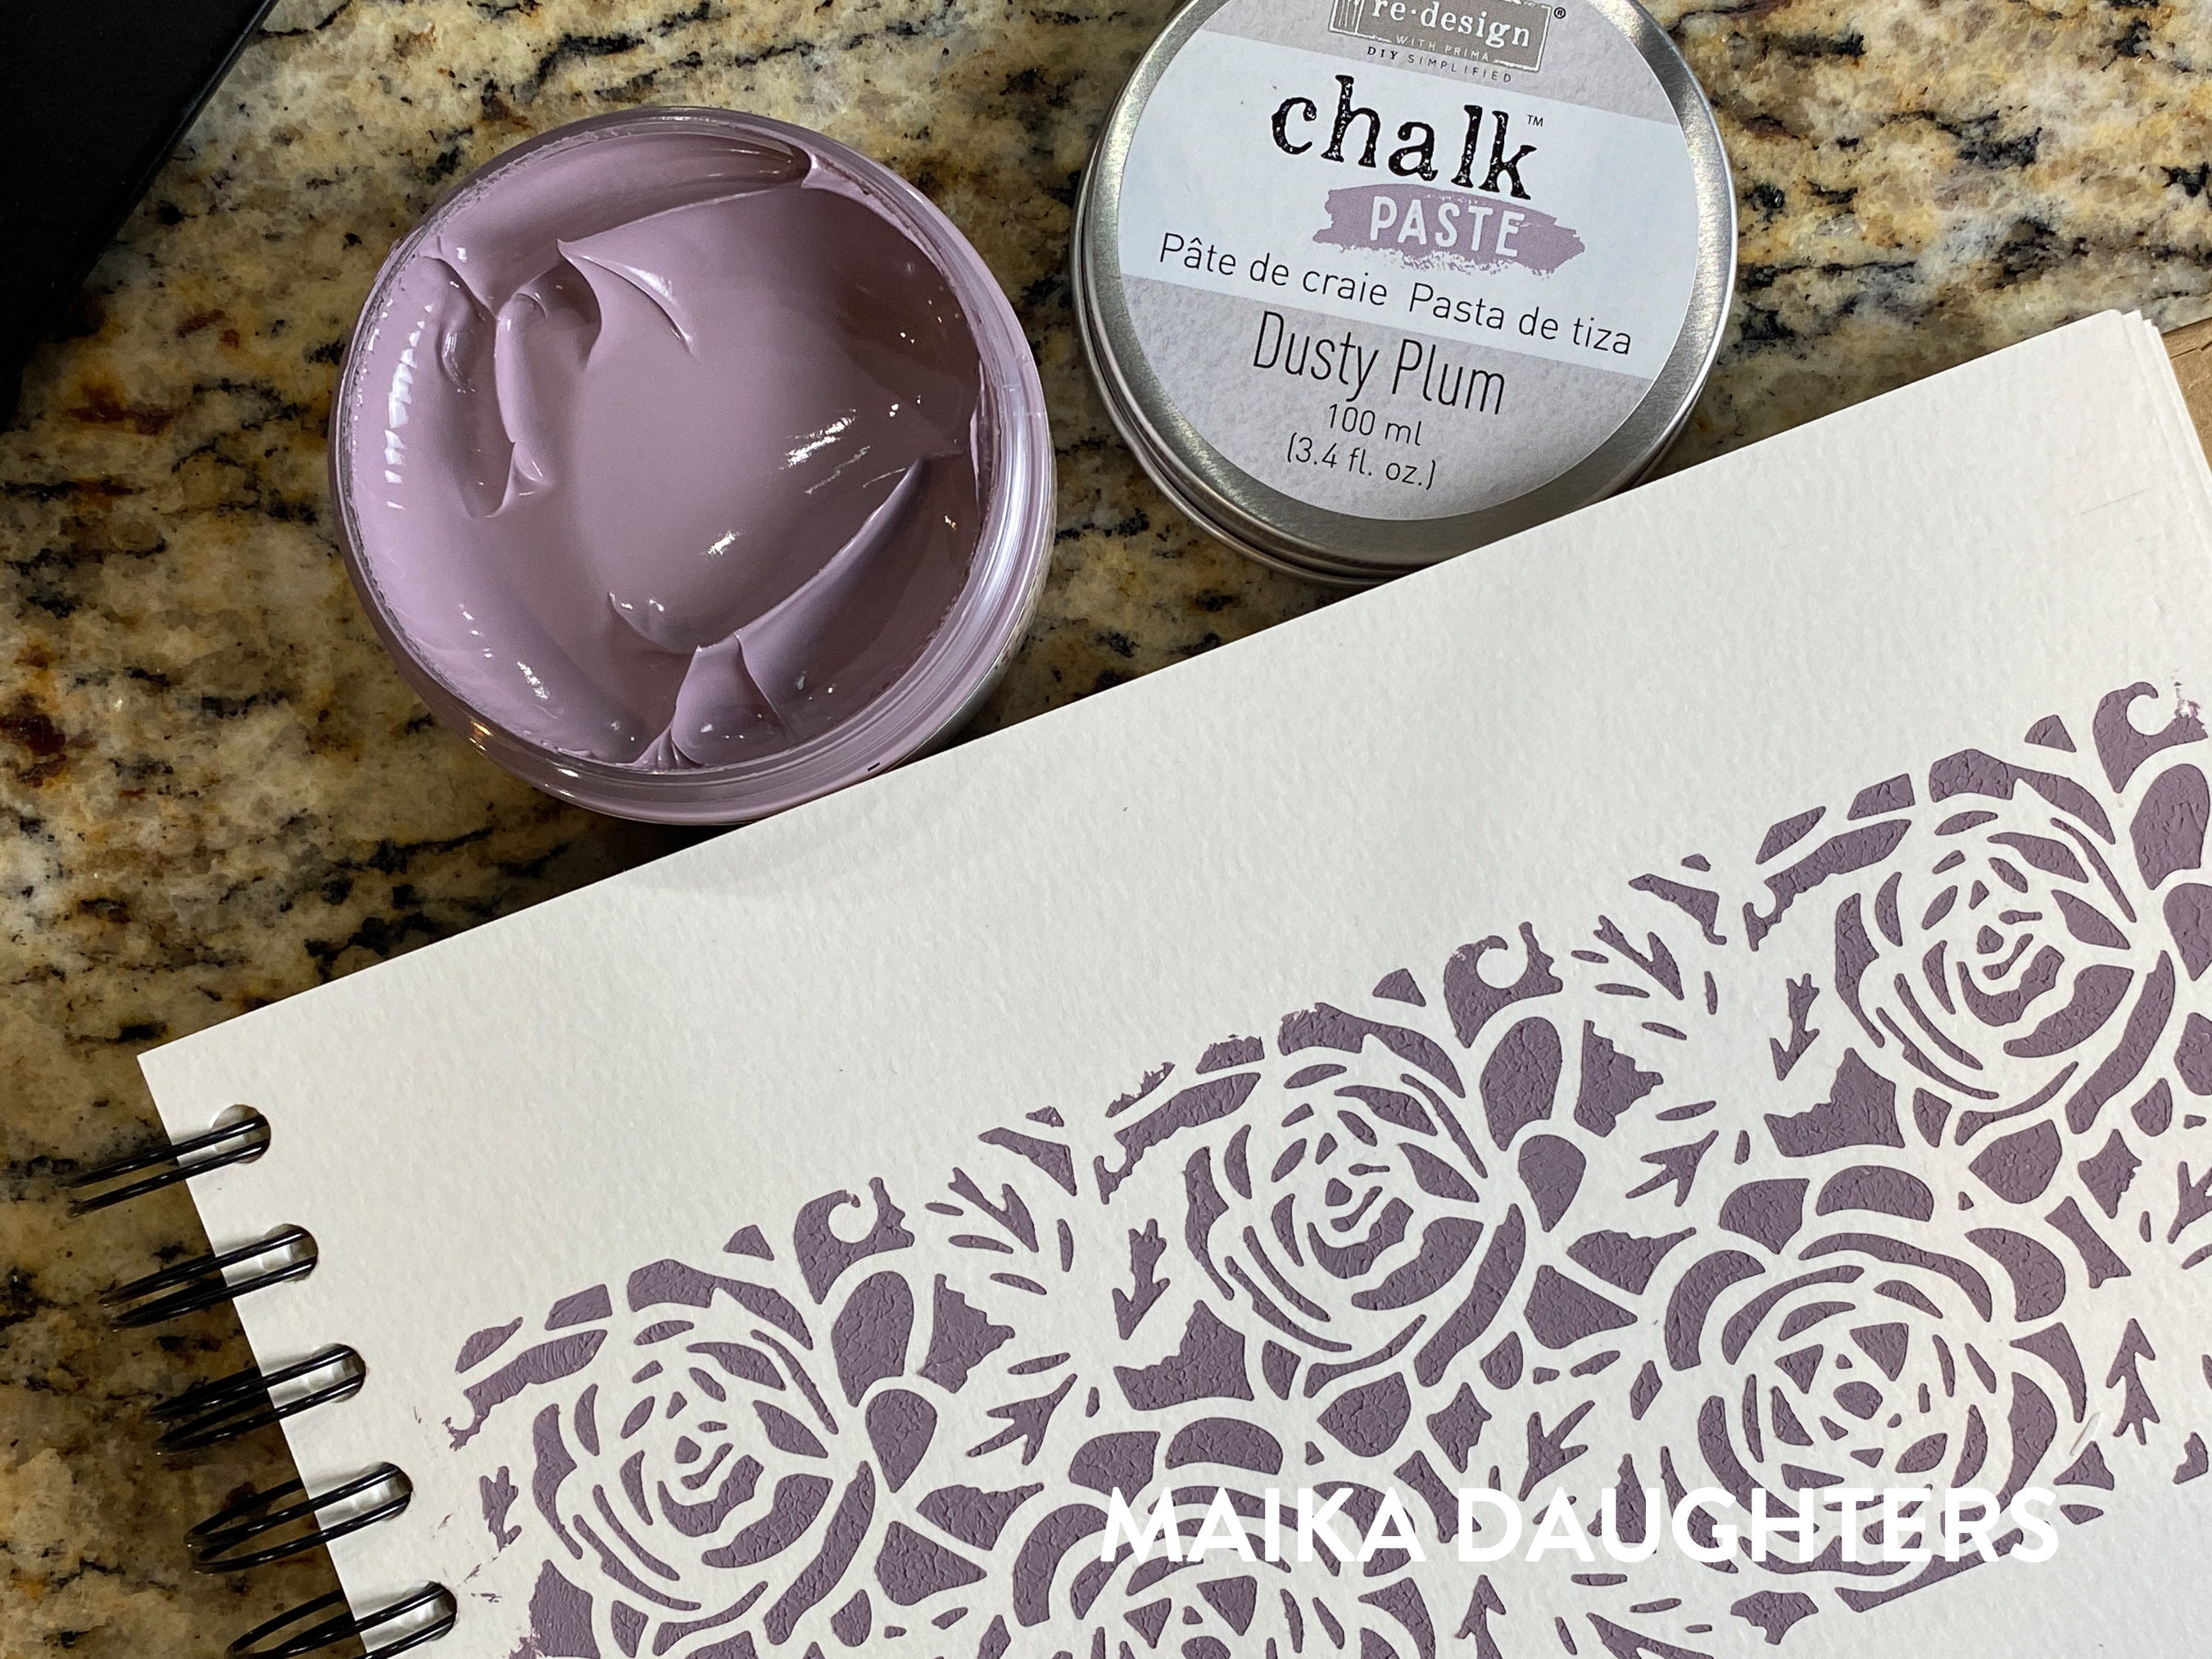 Dusty Plum Chalk Paste